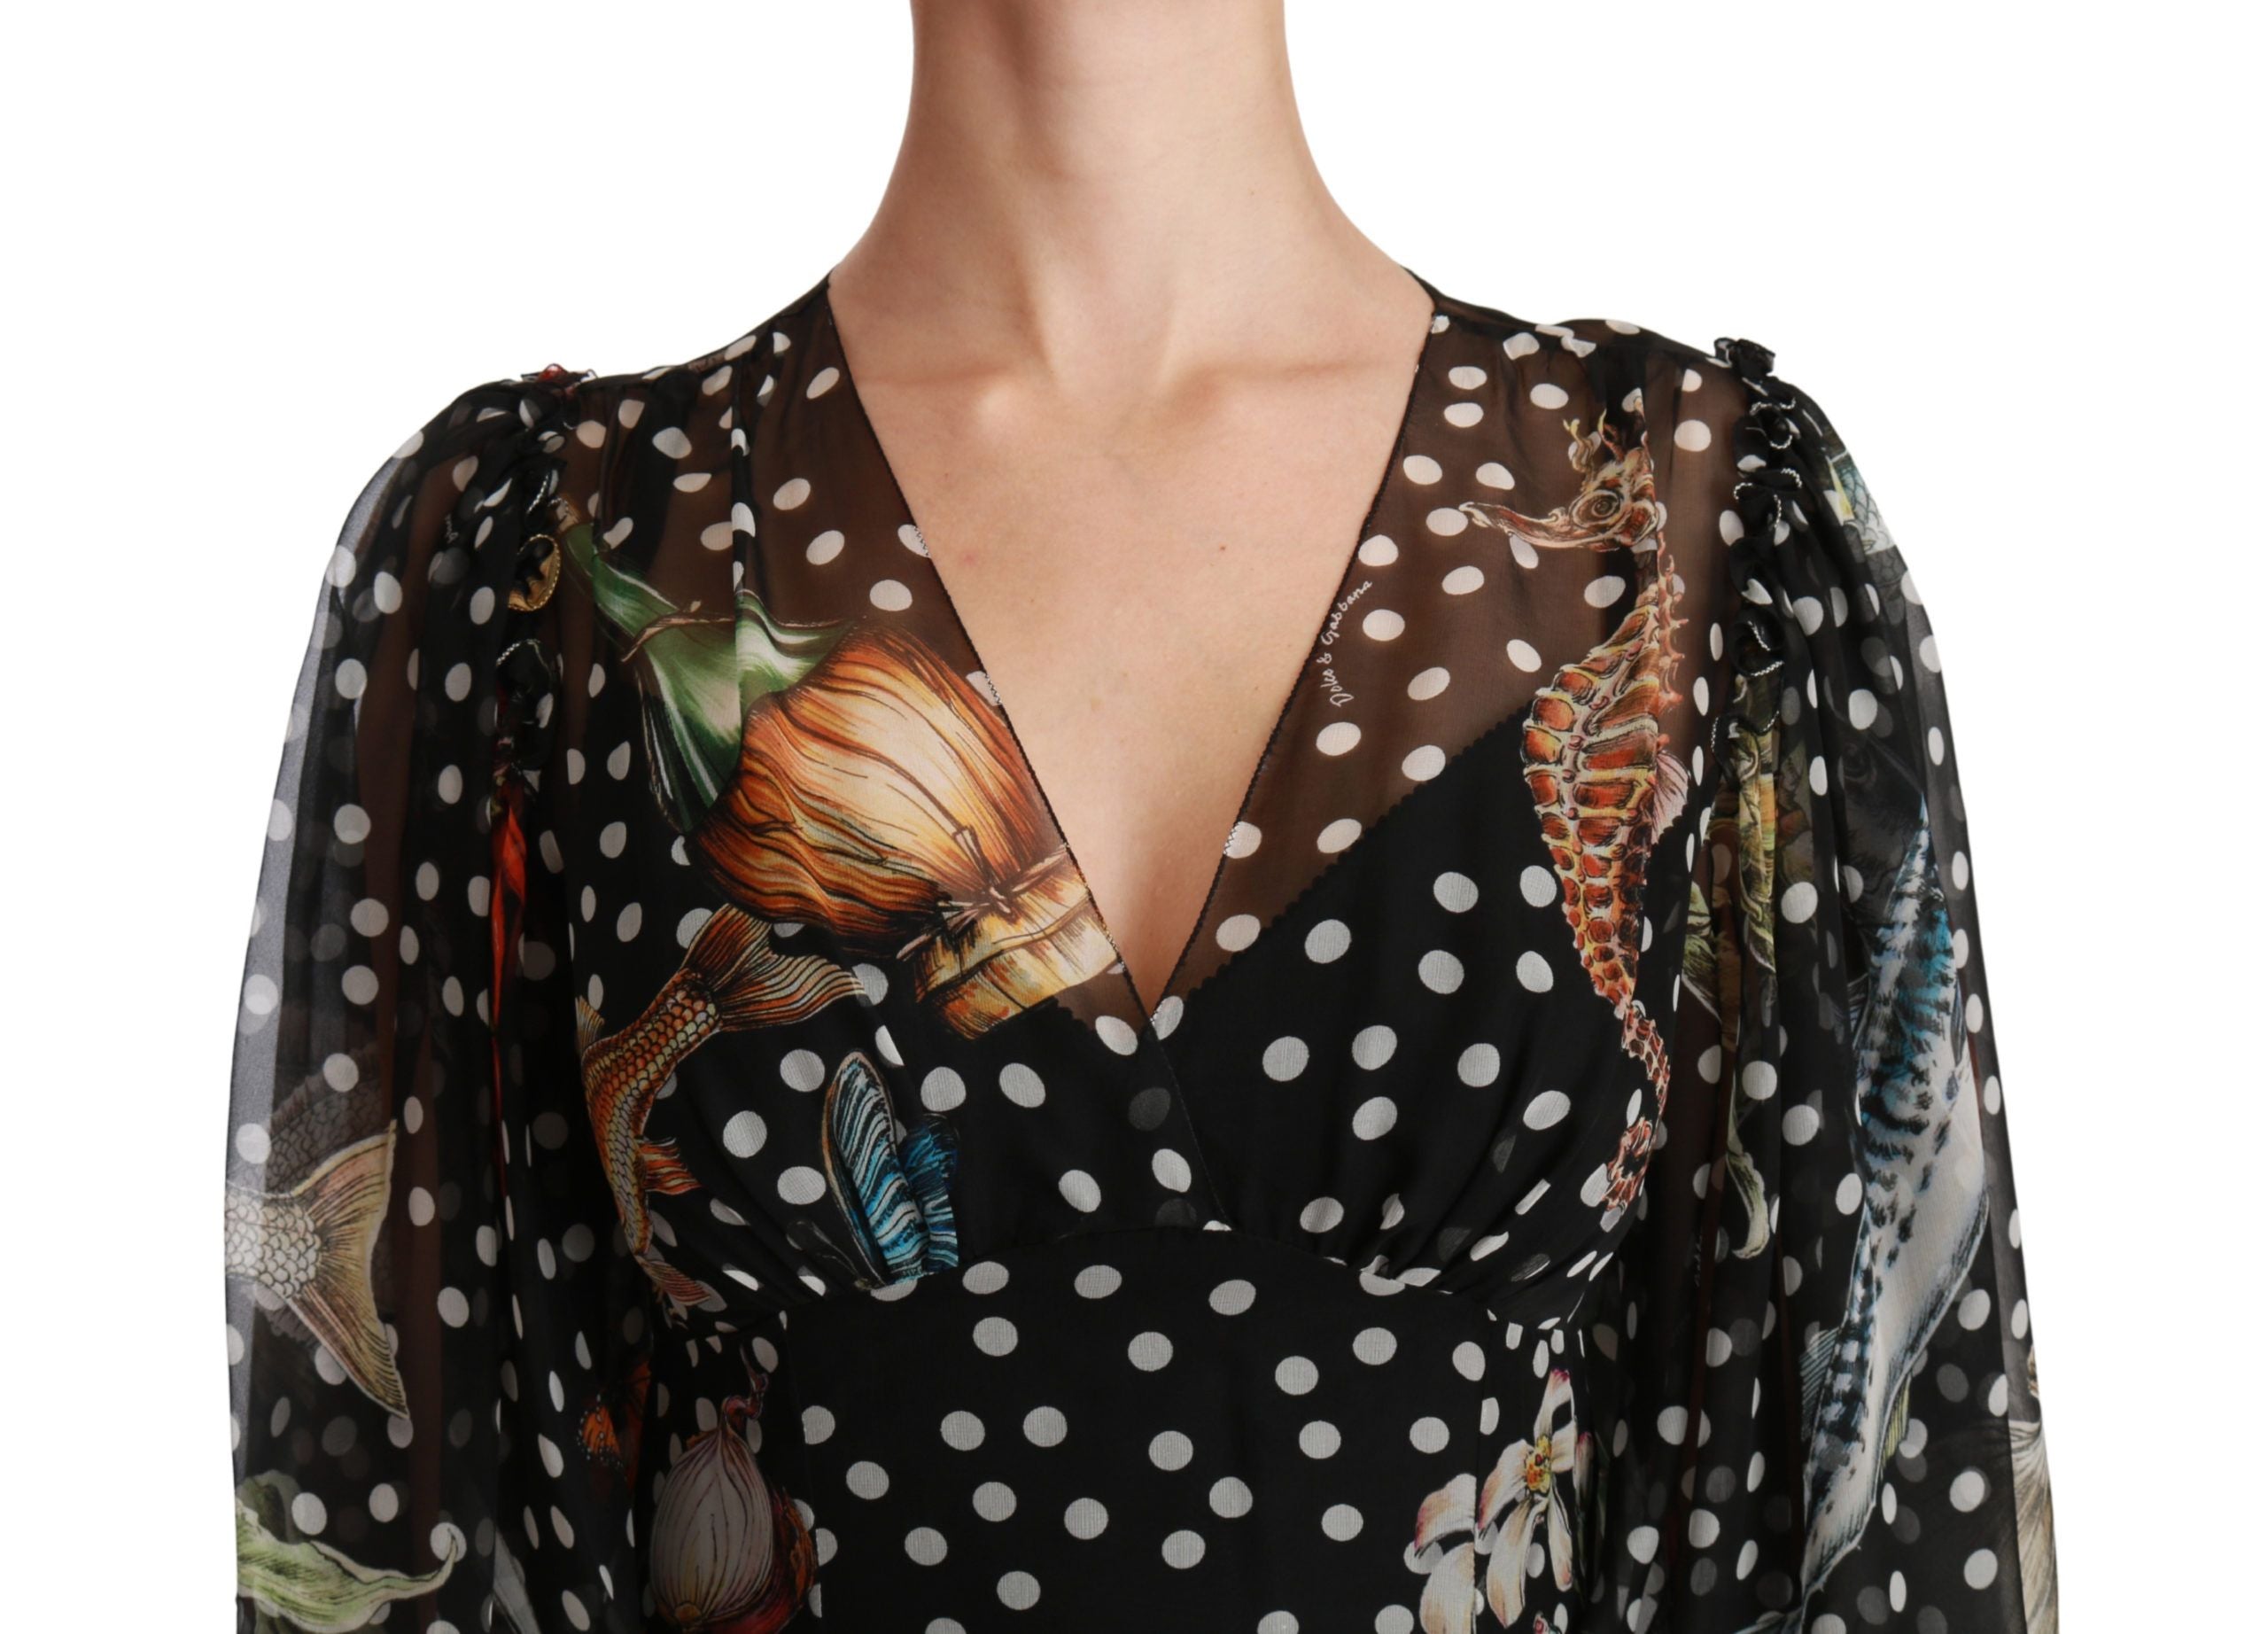 Dolce & Gabbana Elegant Silk Pleated A-Line Maxi Dress